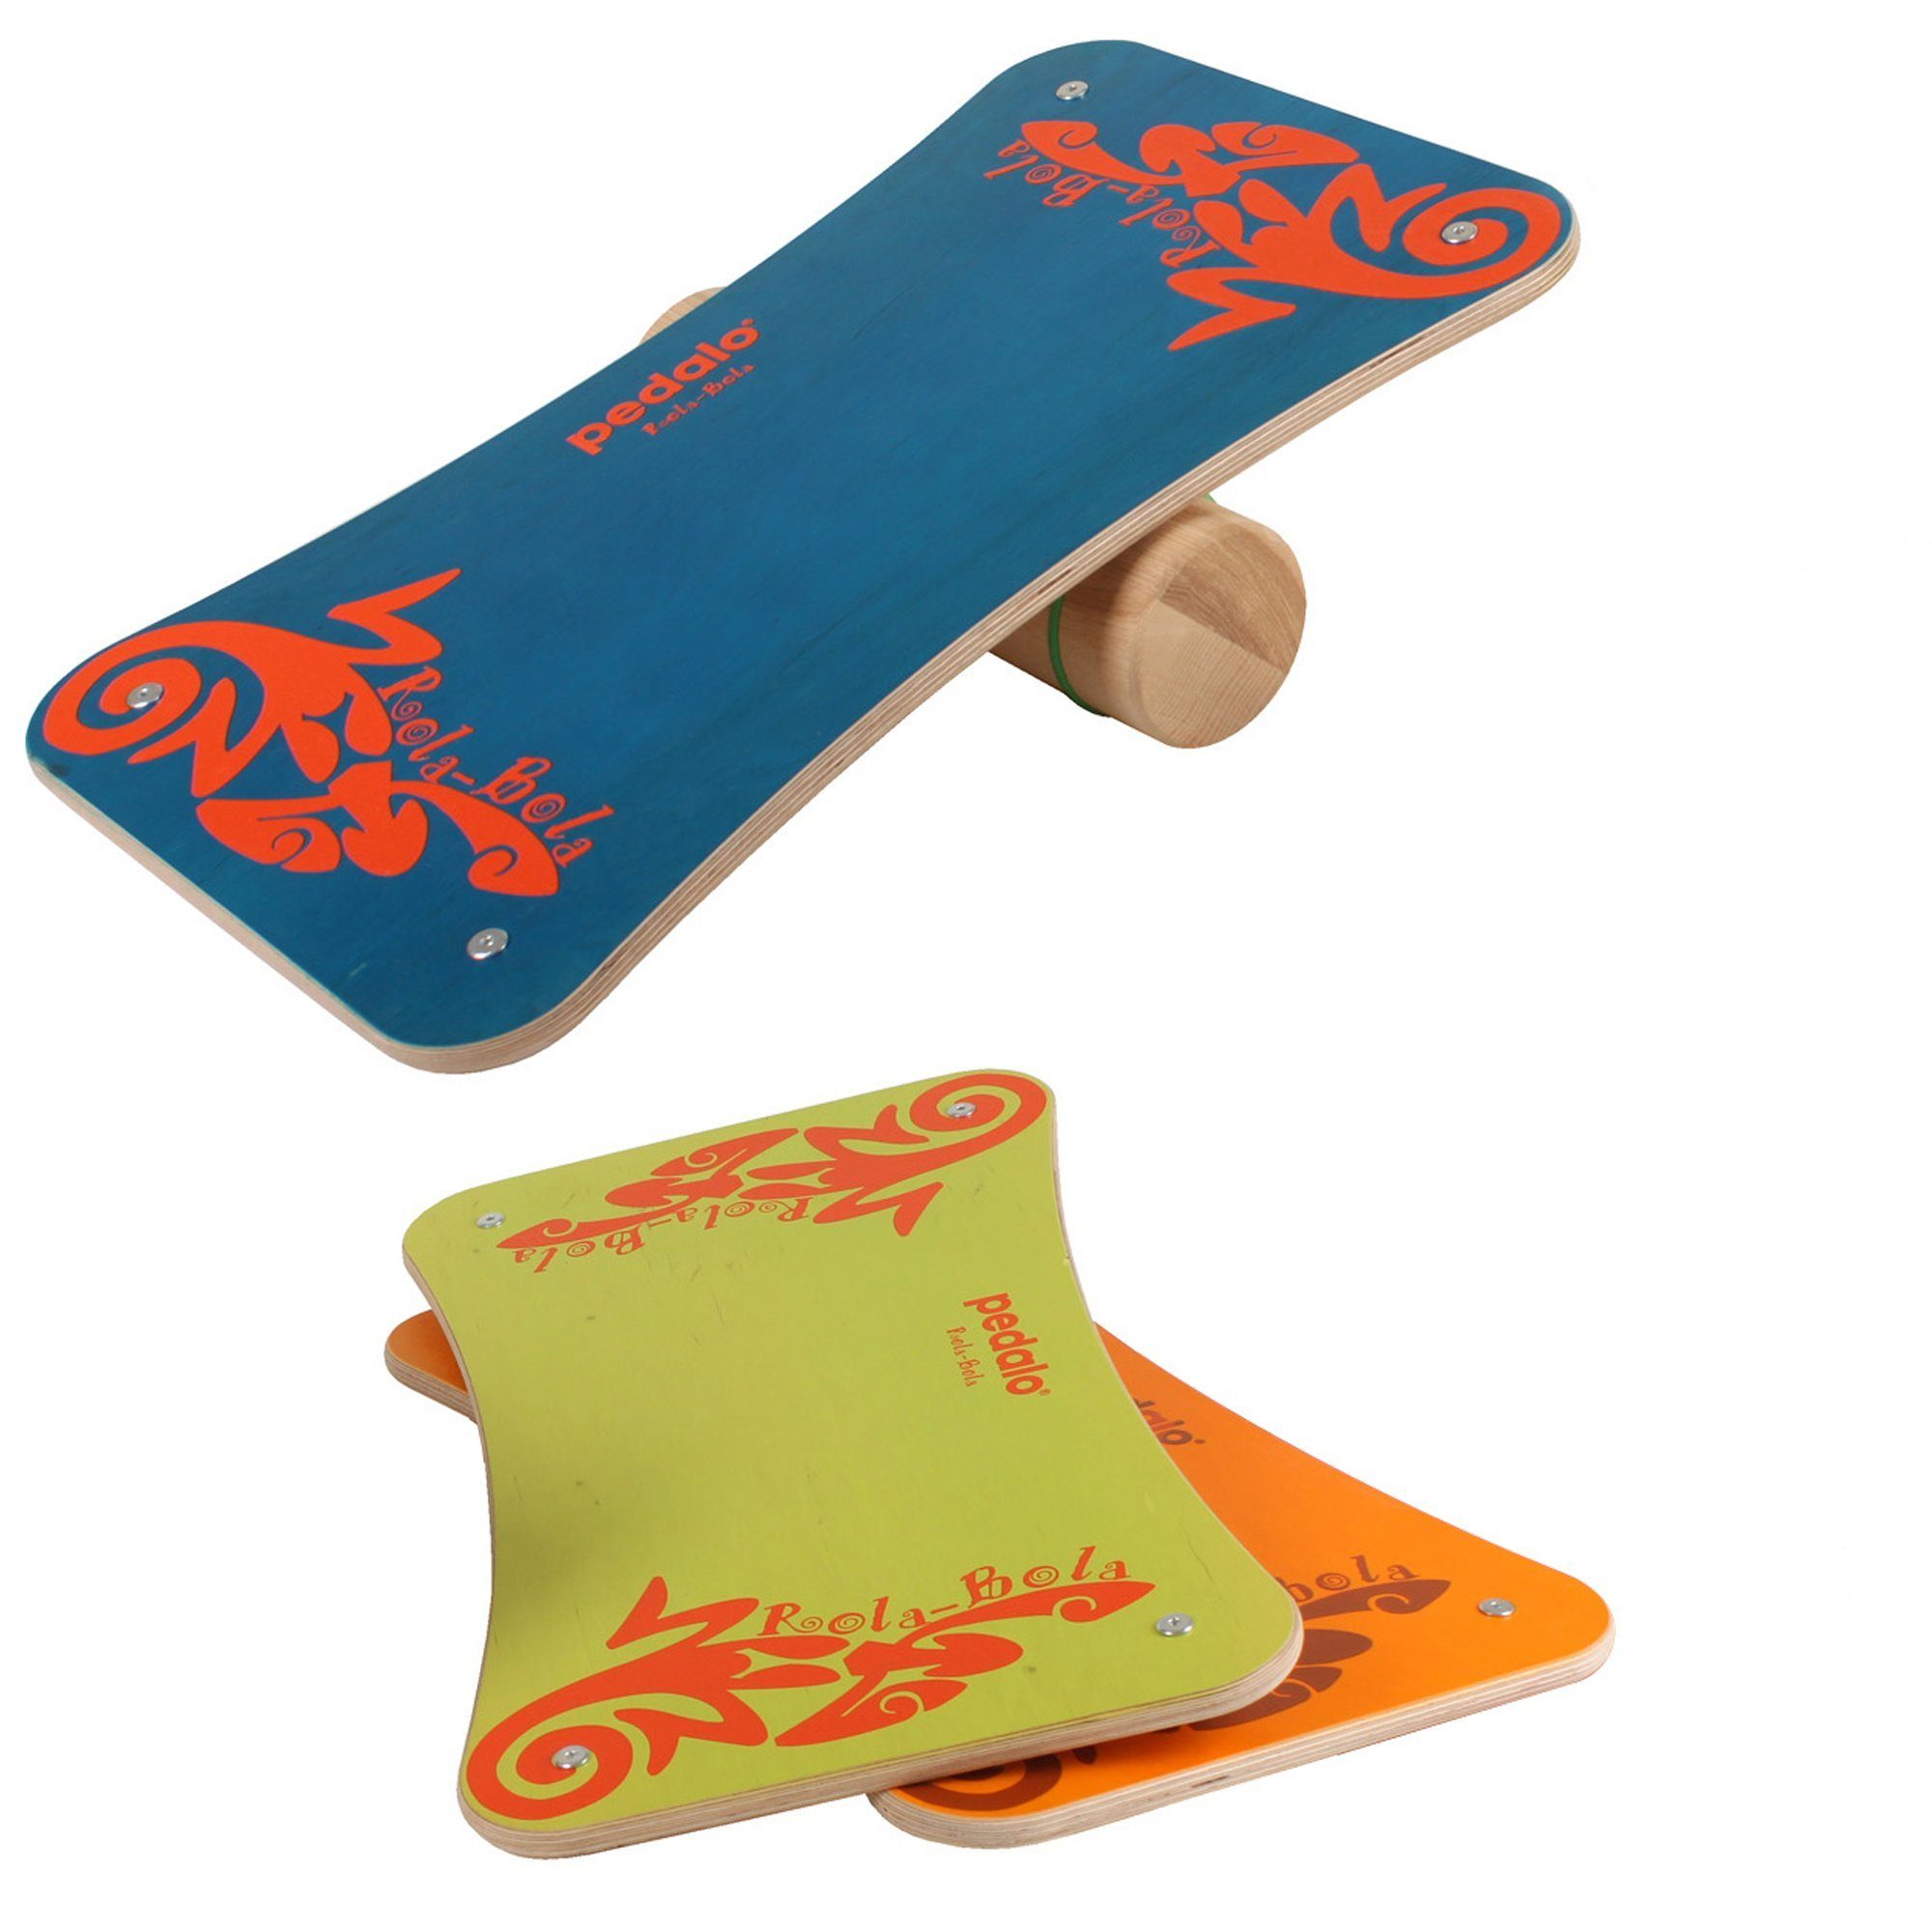 pedalo® Balanceboard Pedalo orange Gleichgewichtstrainer, Rola-Bola Balanceboard, Reflextrainer